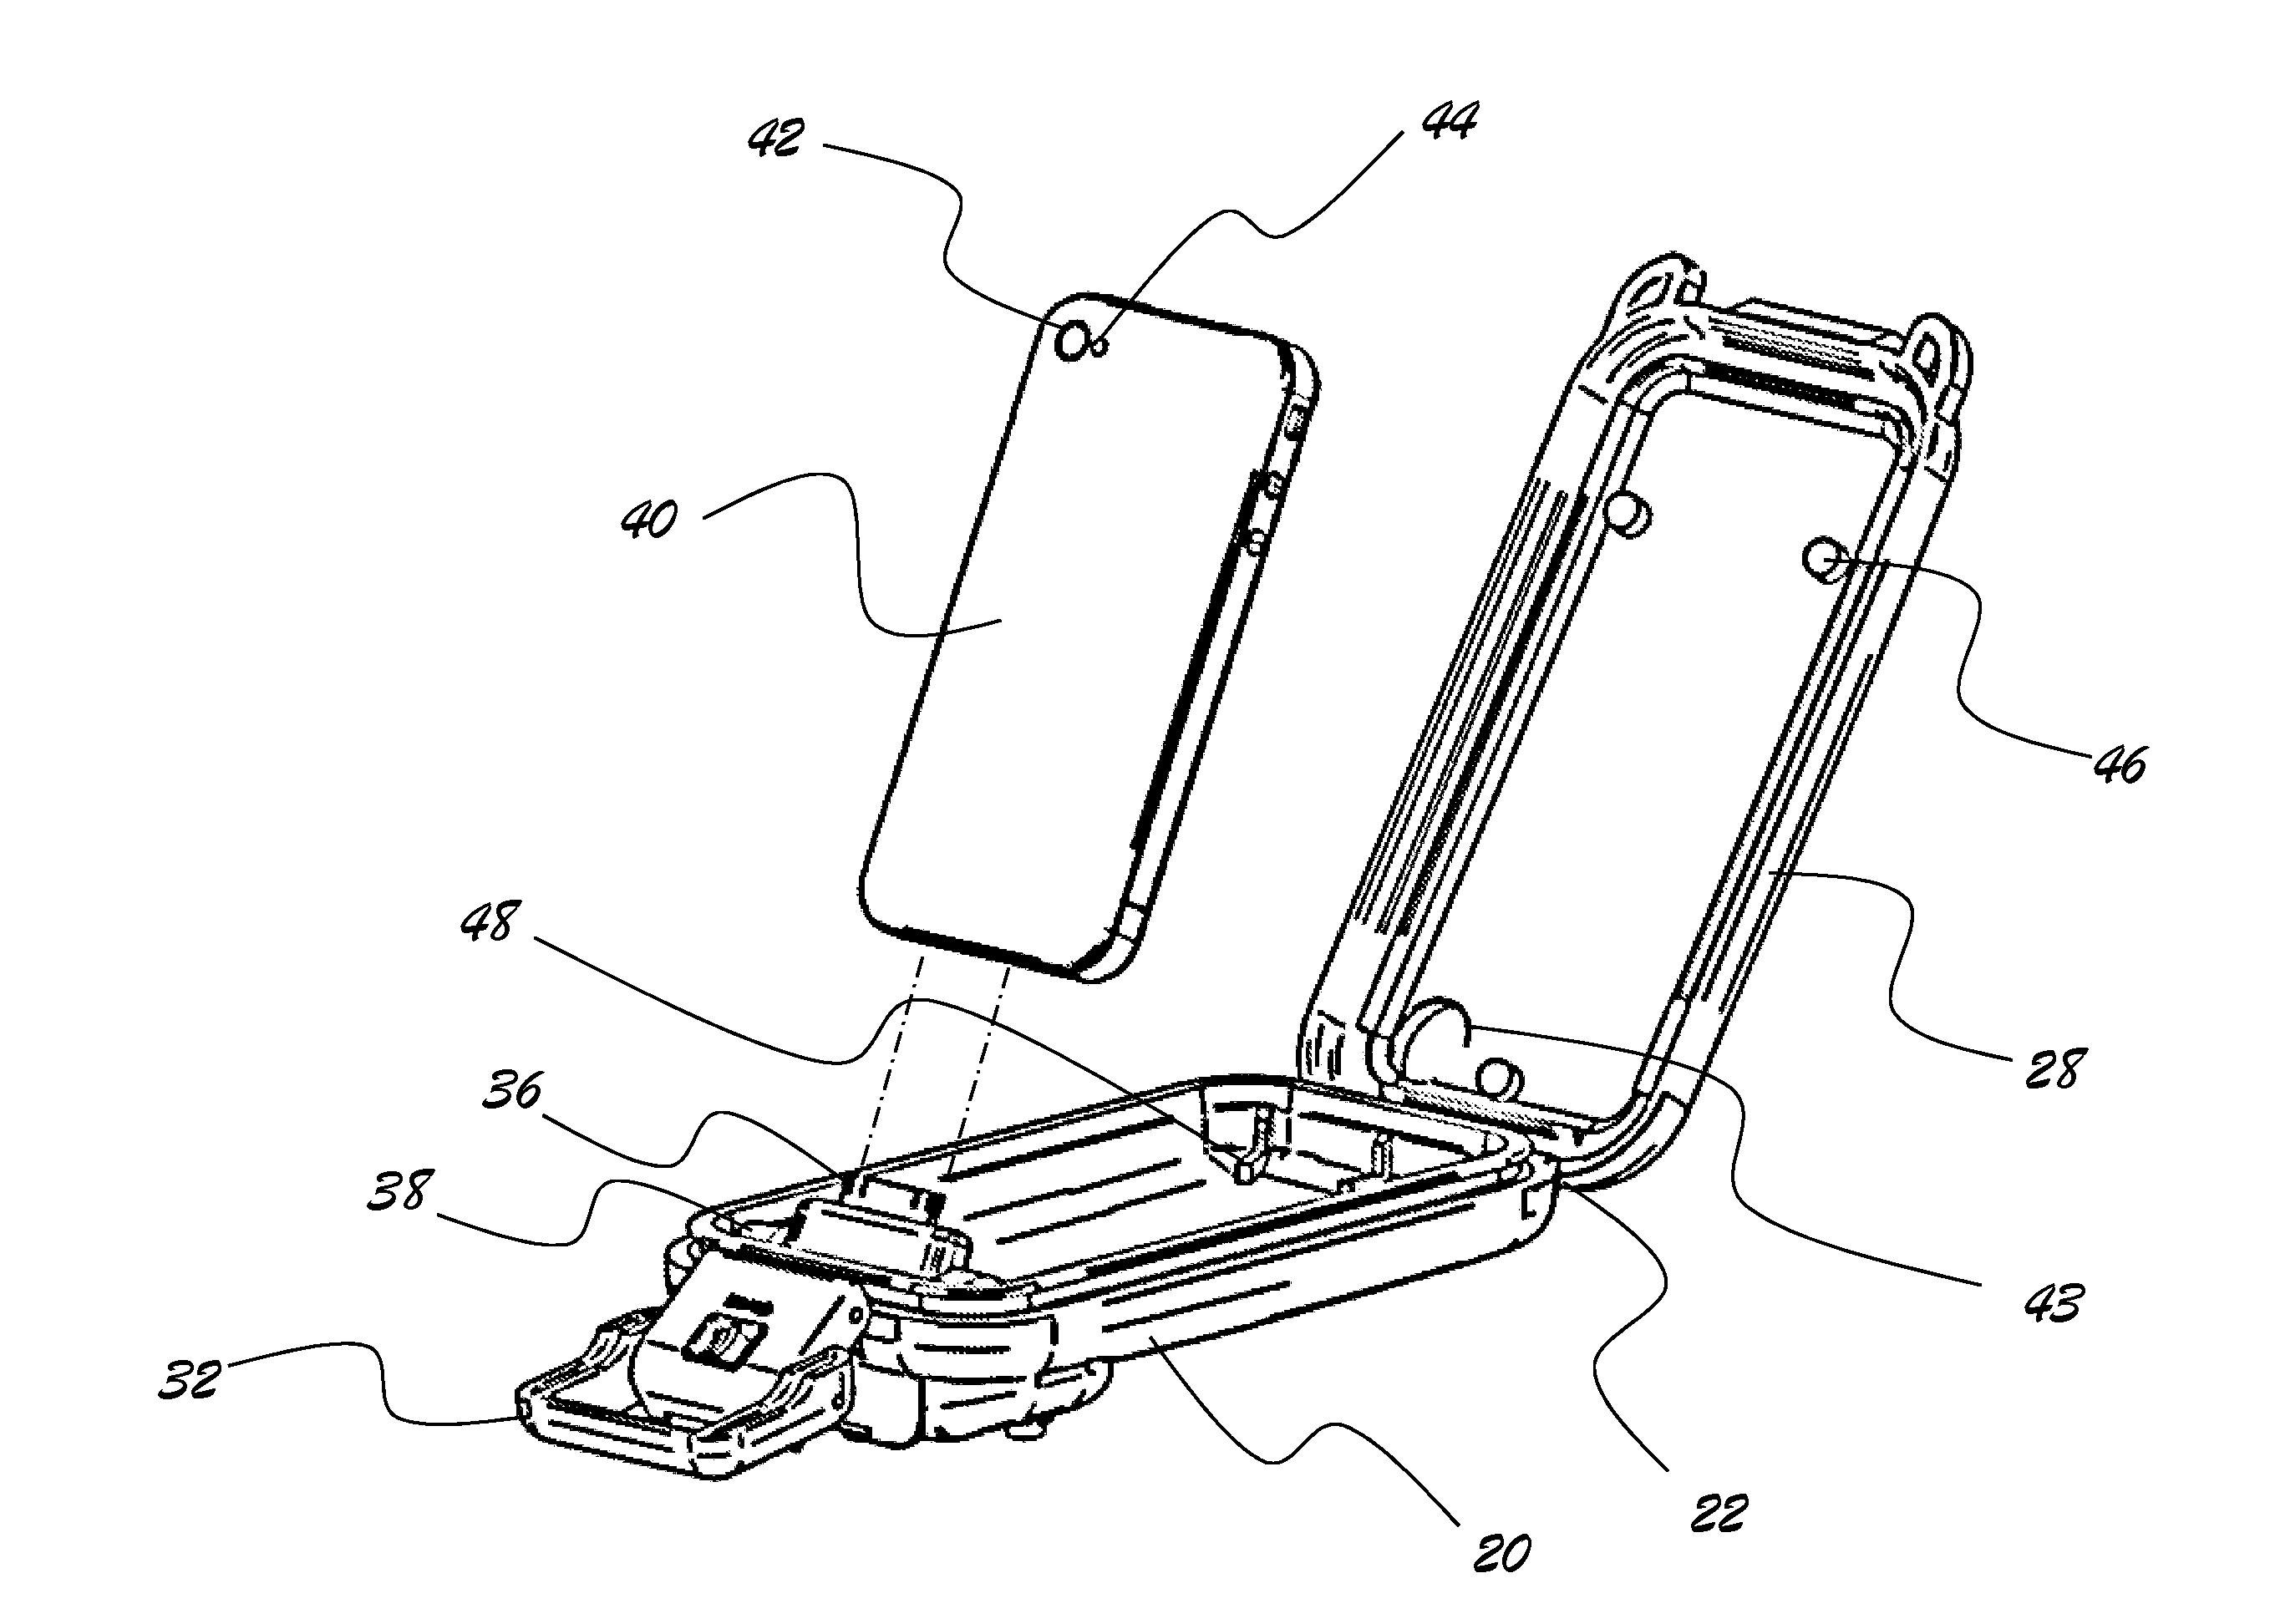 Waterproof case for hand held computing device